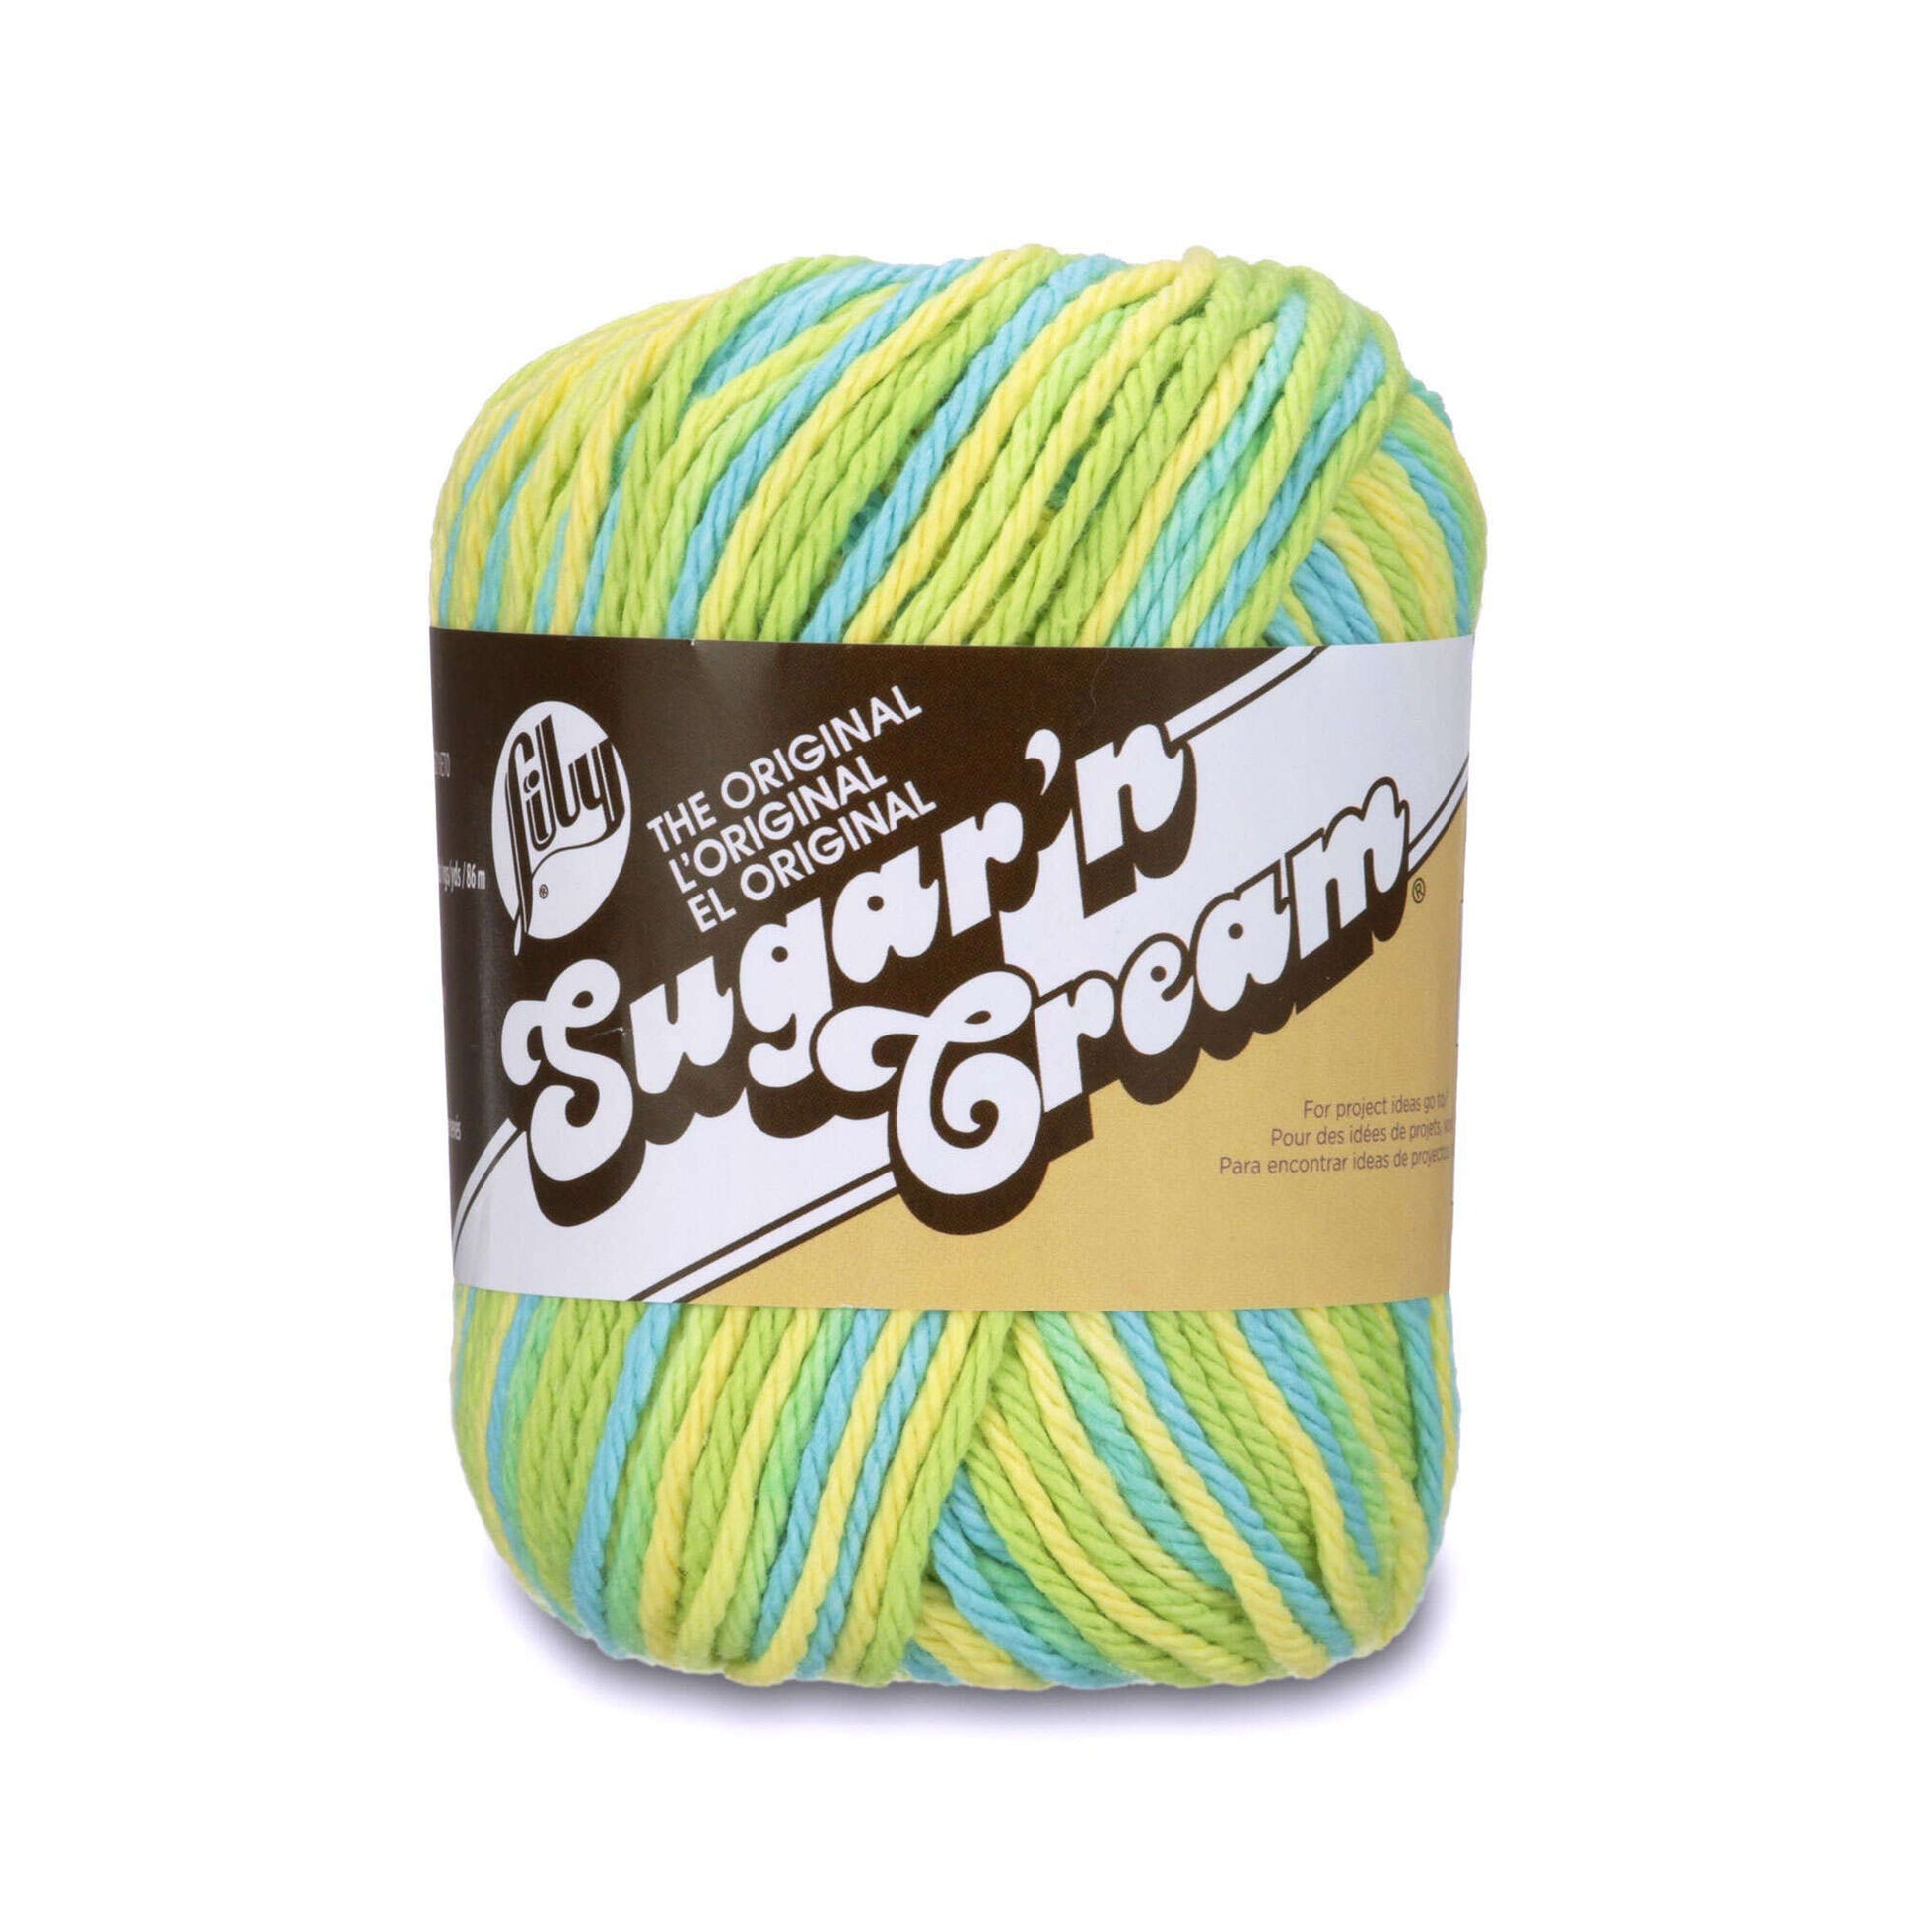 Lily Sugar'n Cream Ombres Yarn - Discontinued Shades